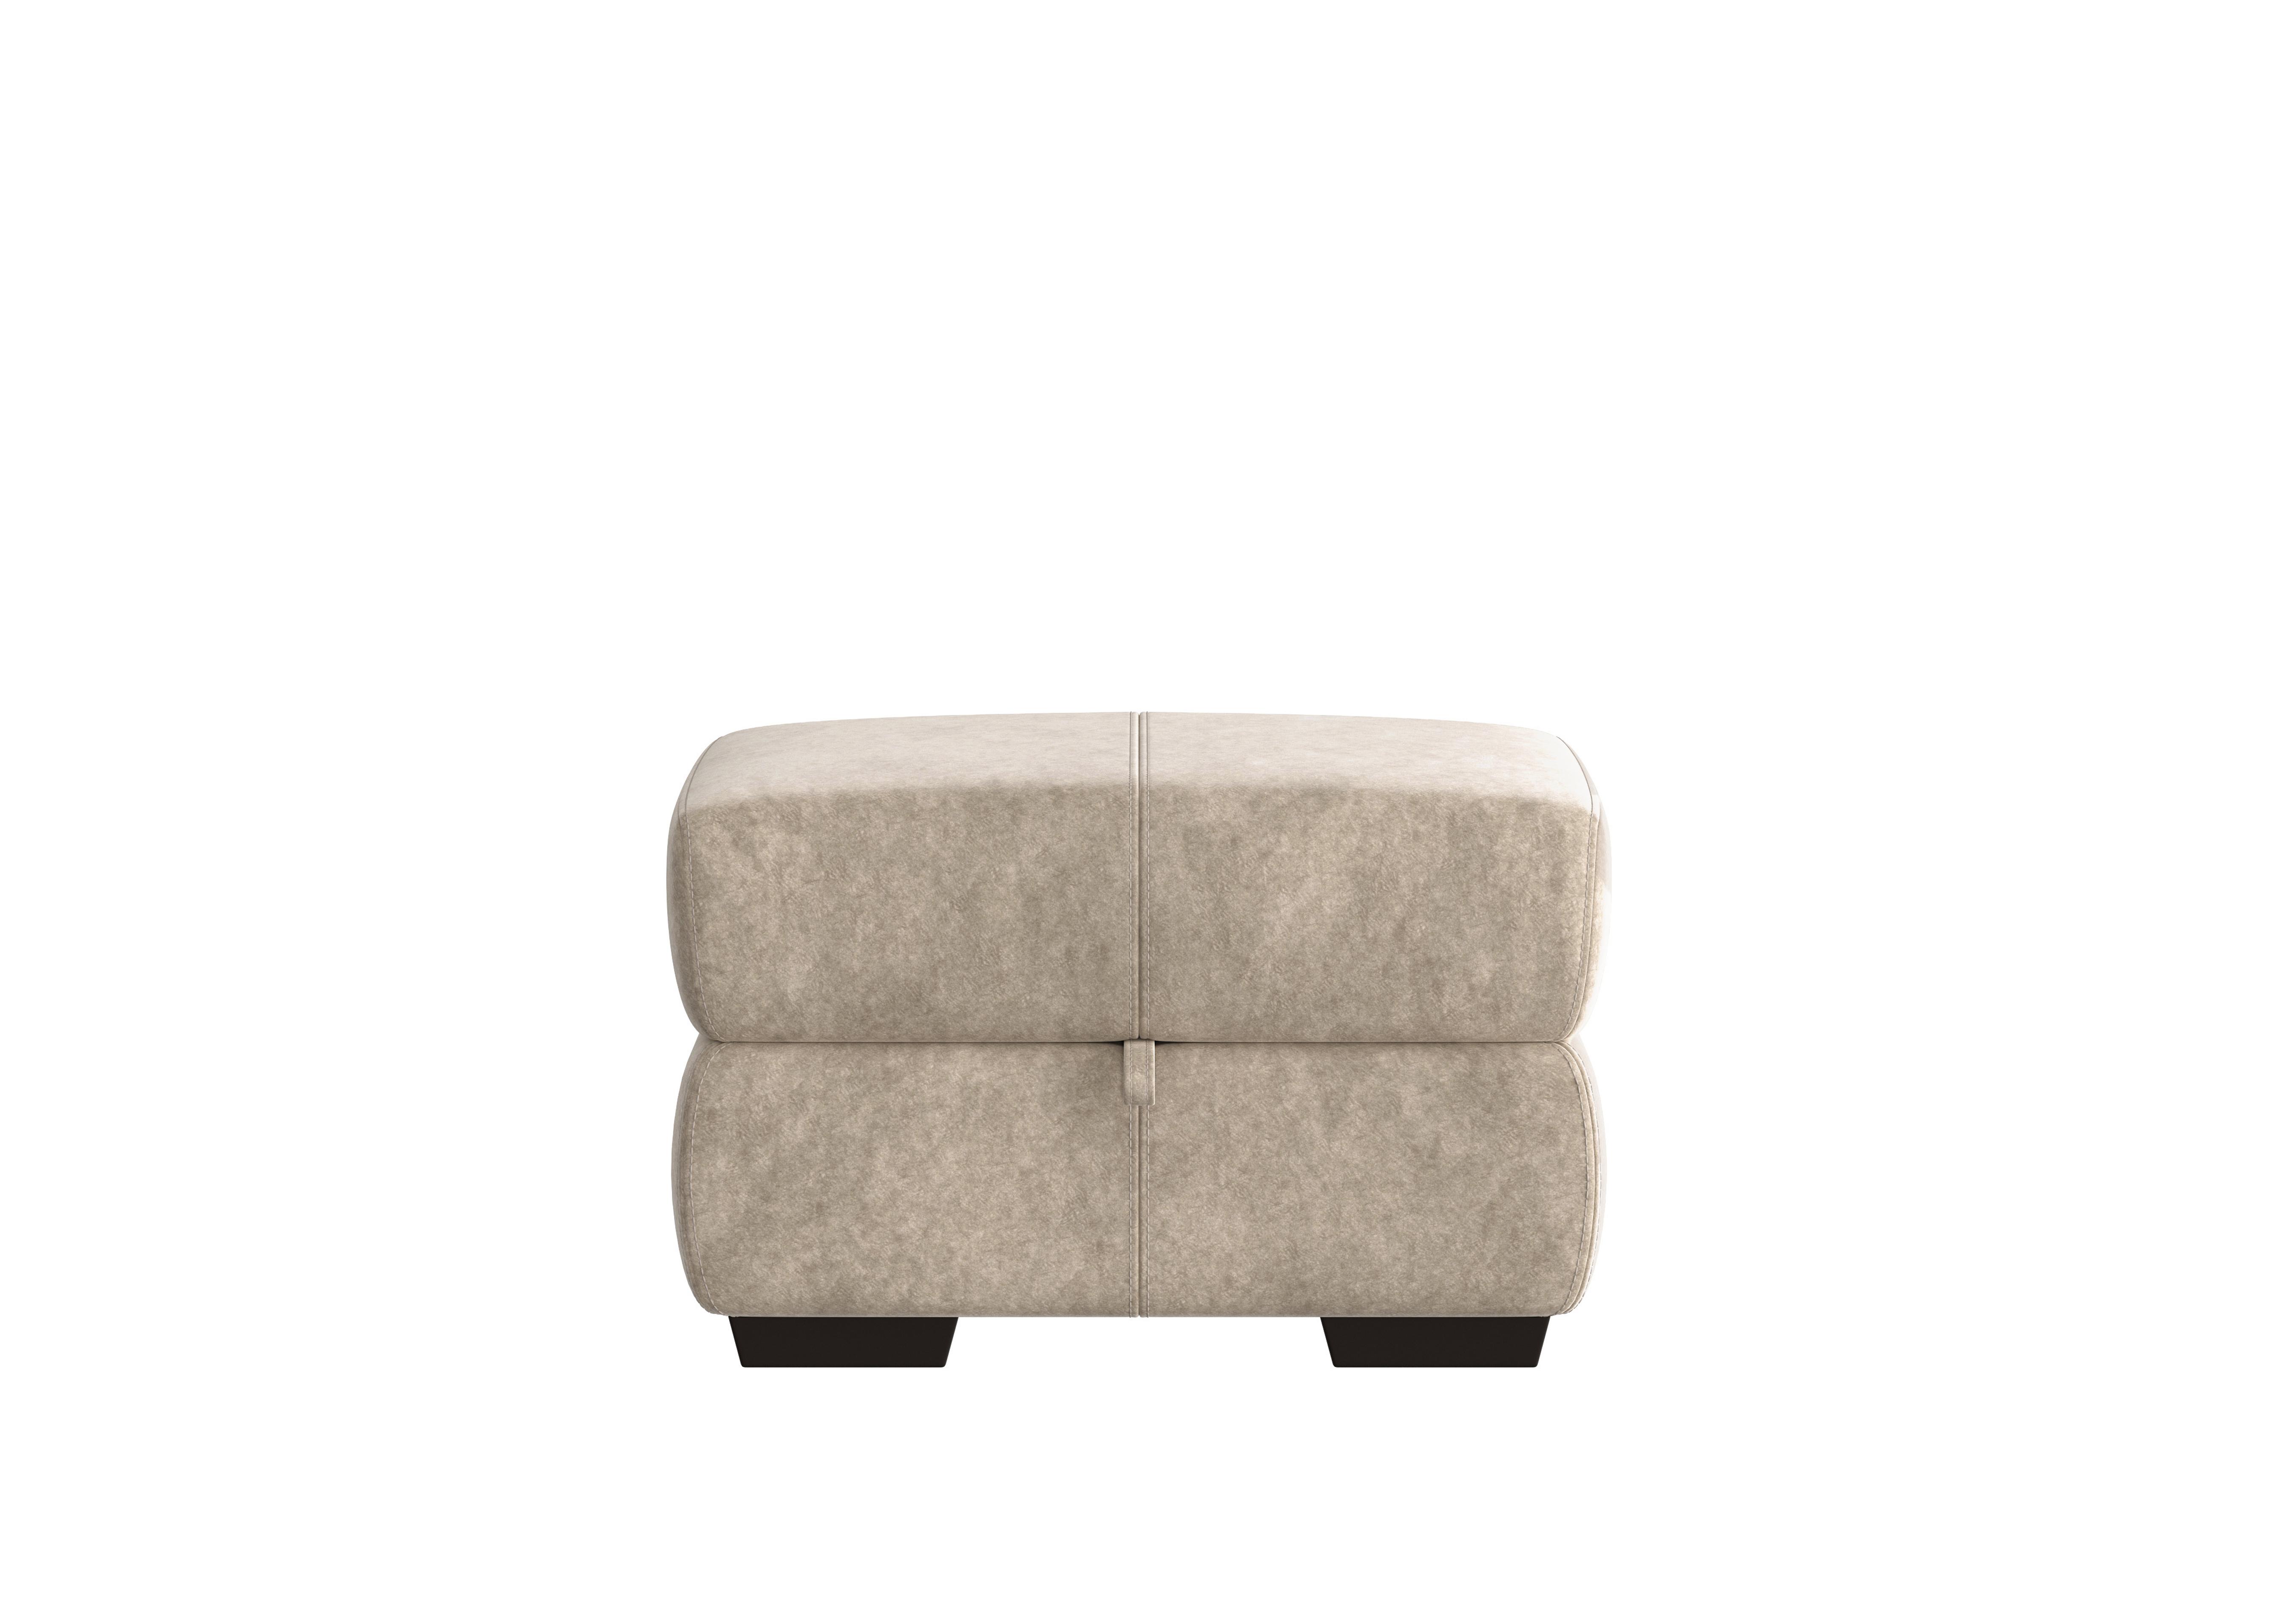 Elixir Fabric Storage Footstool in Bfa-Bnn-R26 Fv2 Cream on Furniture Village